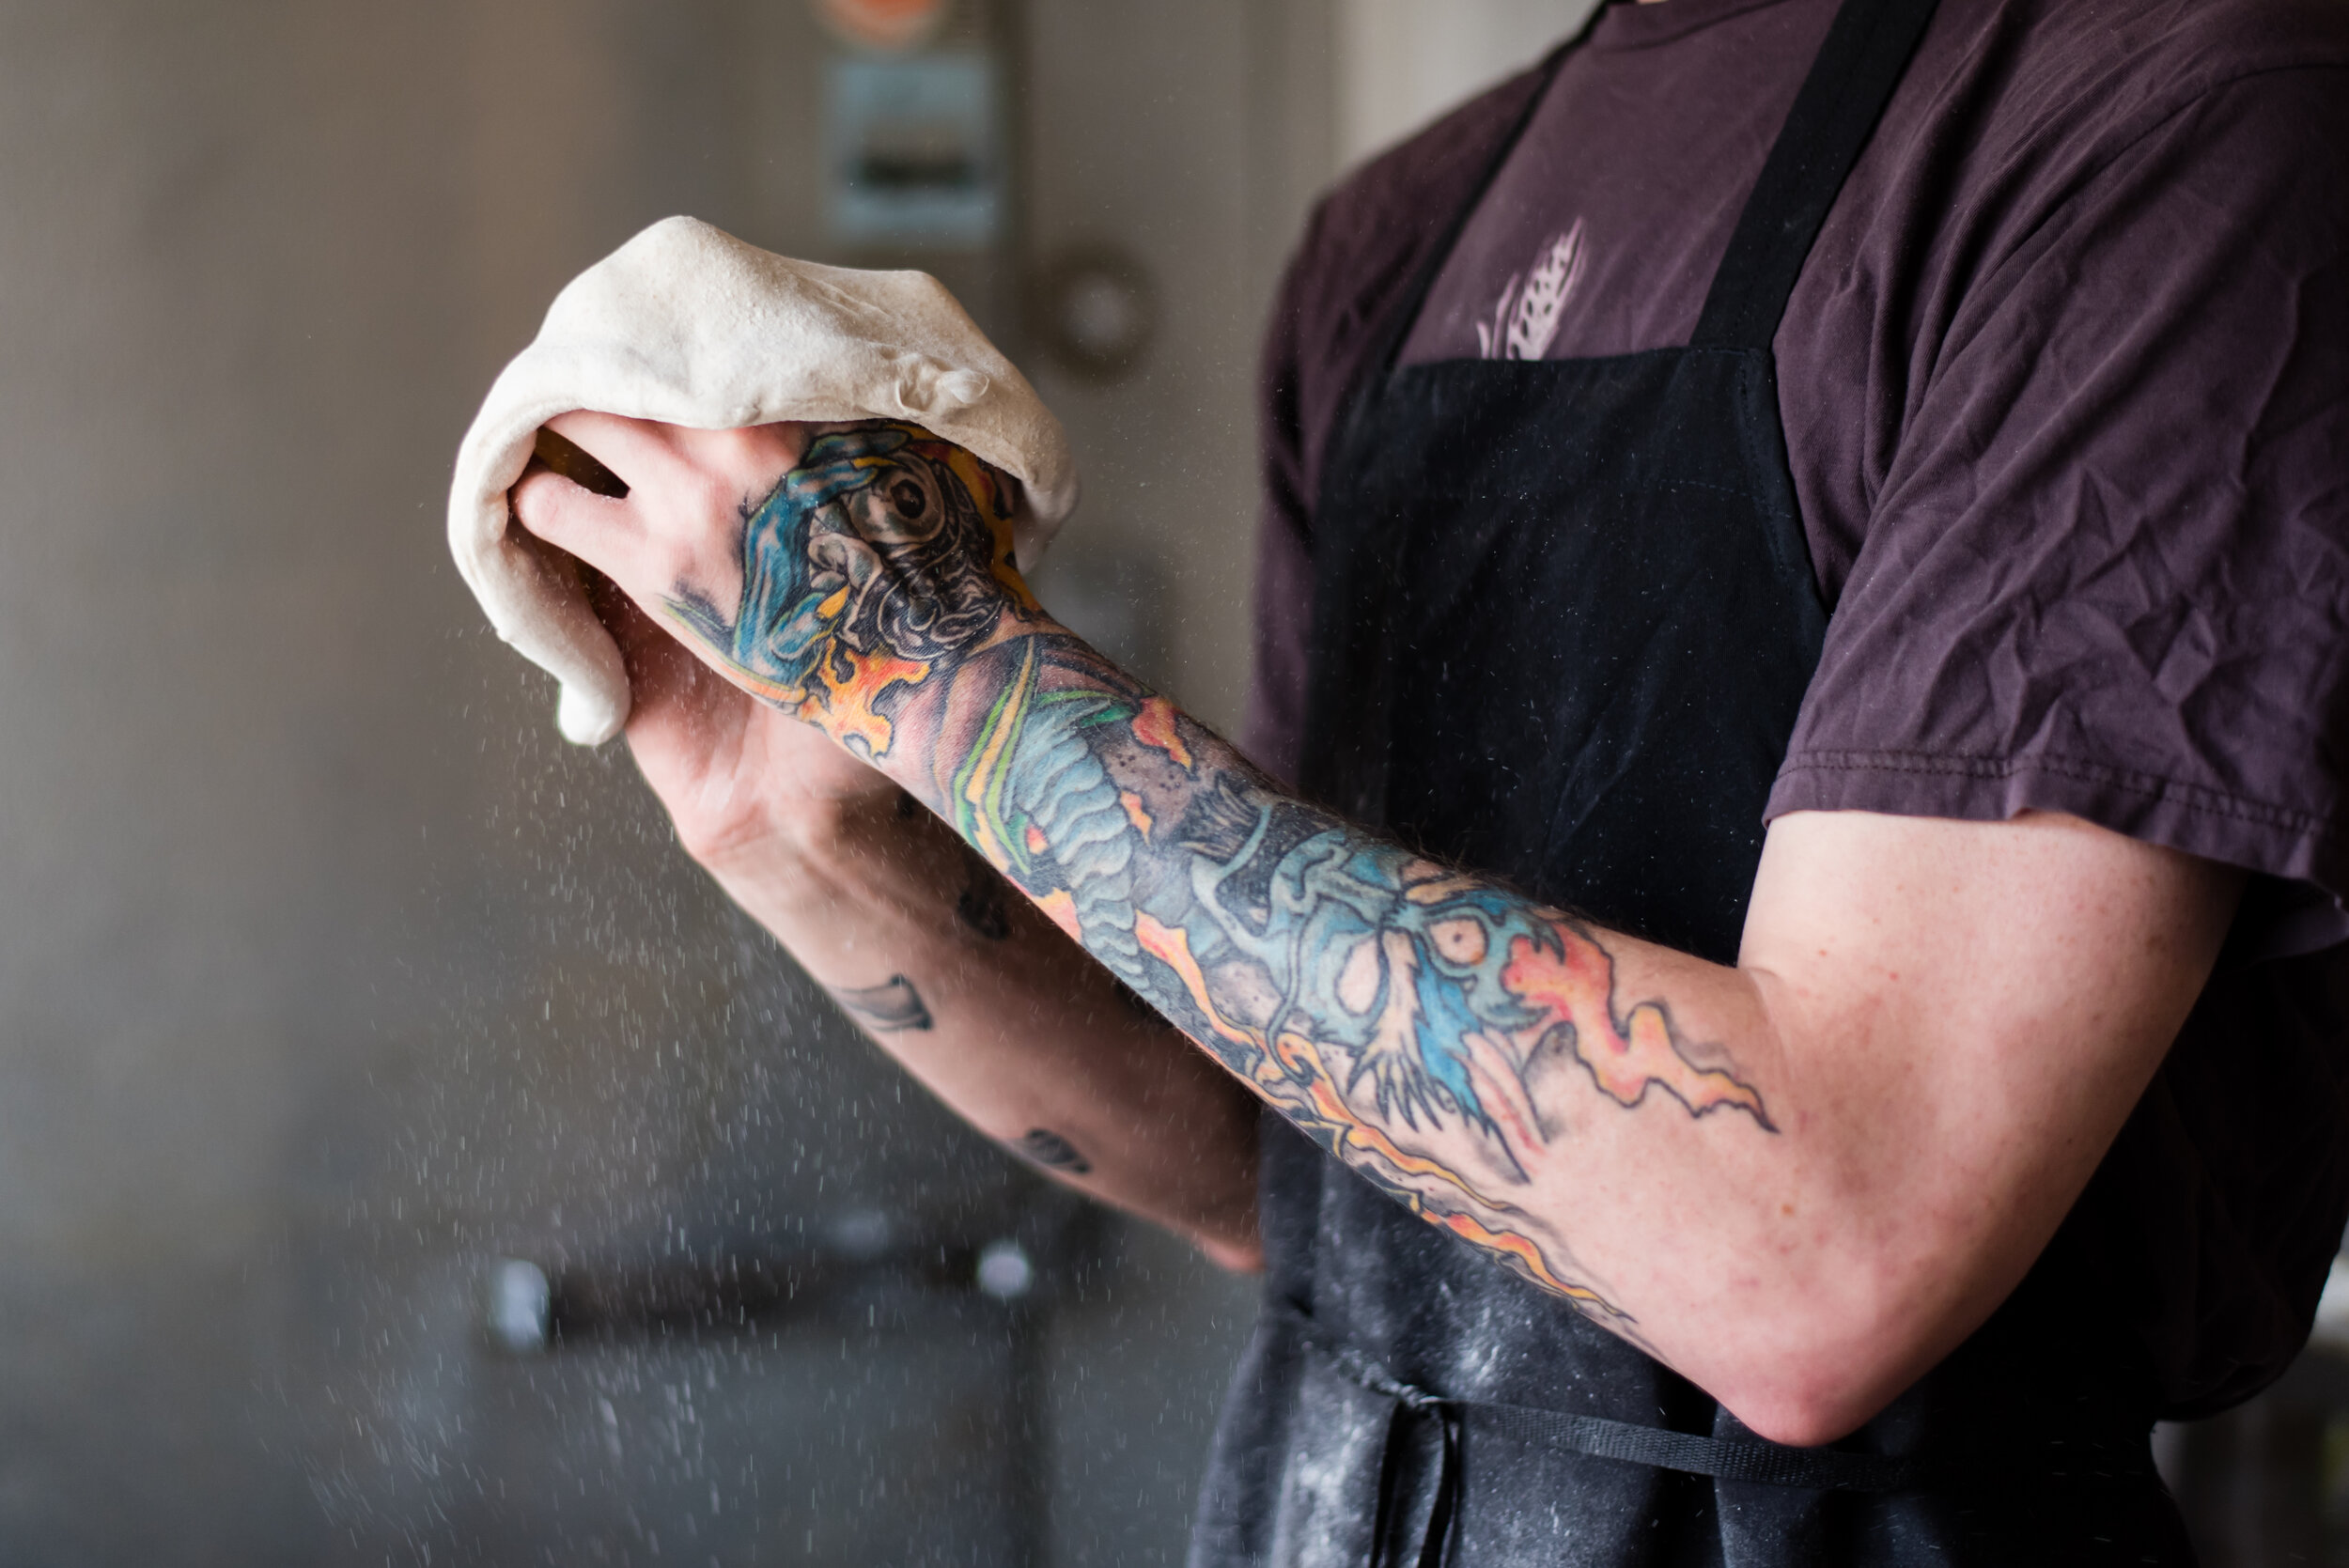 Man with tattoos prepares pizza dough